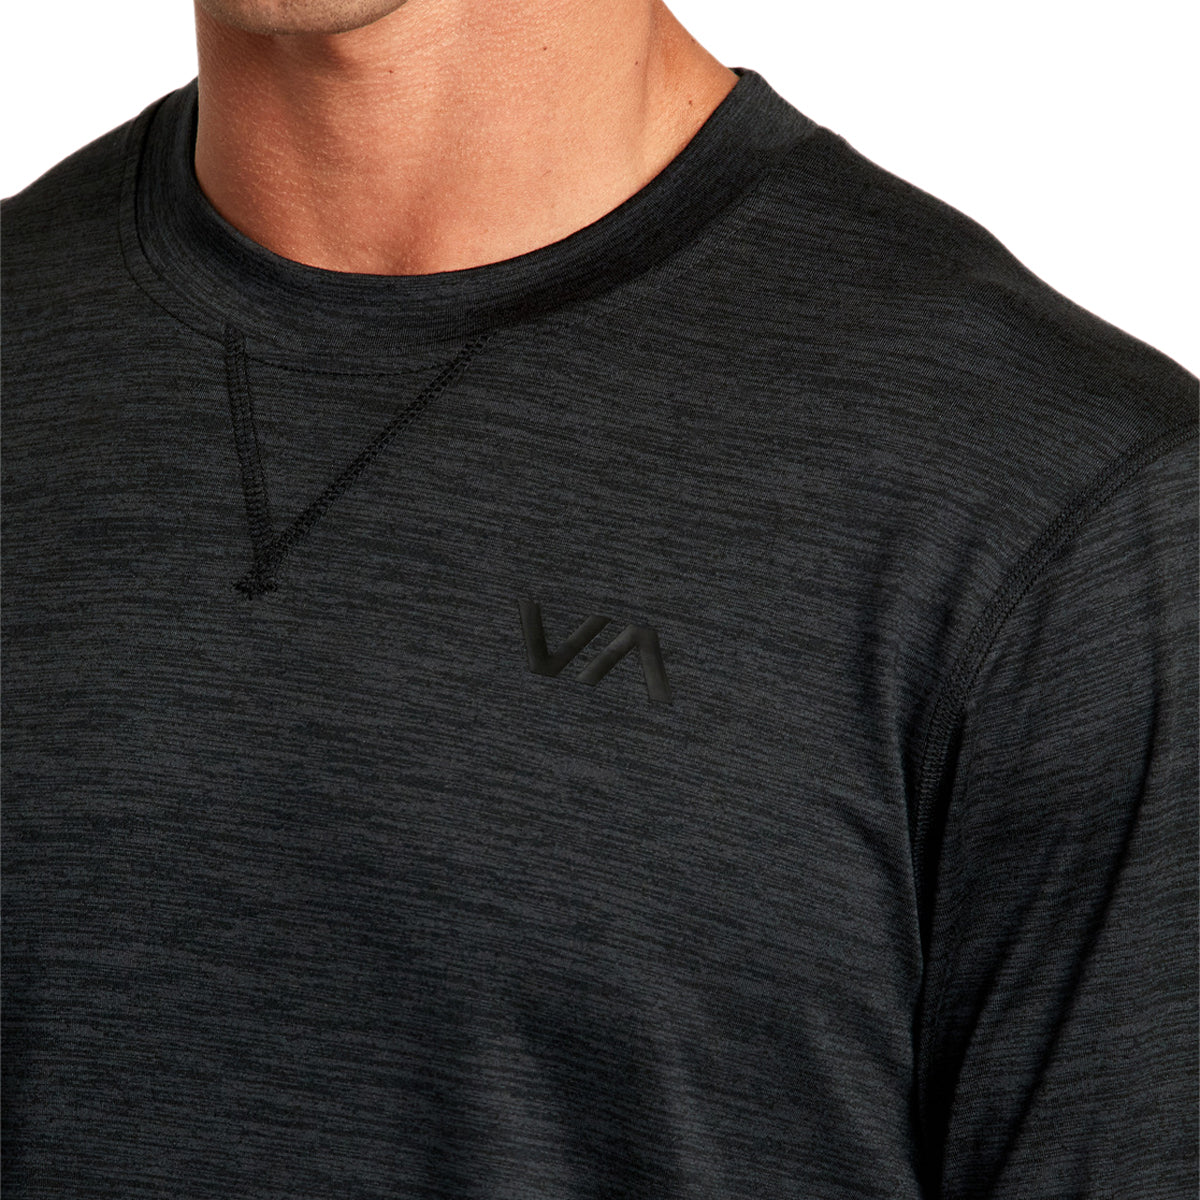 RVCA C-able Crewneck Shirt - Black image 4